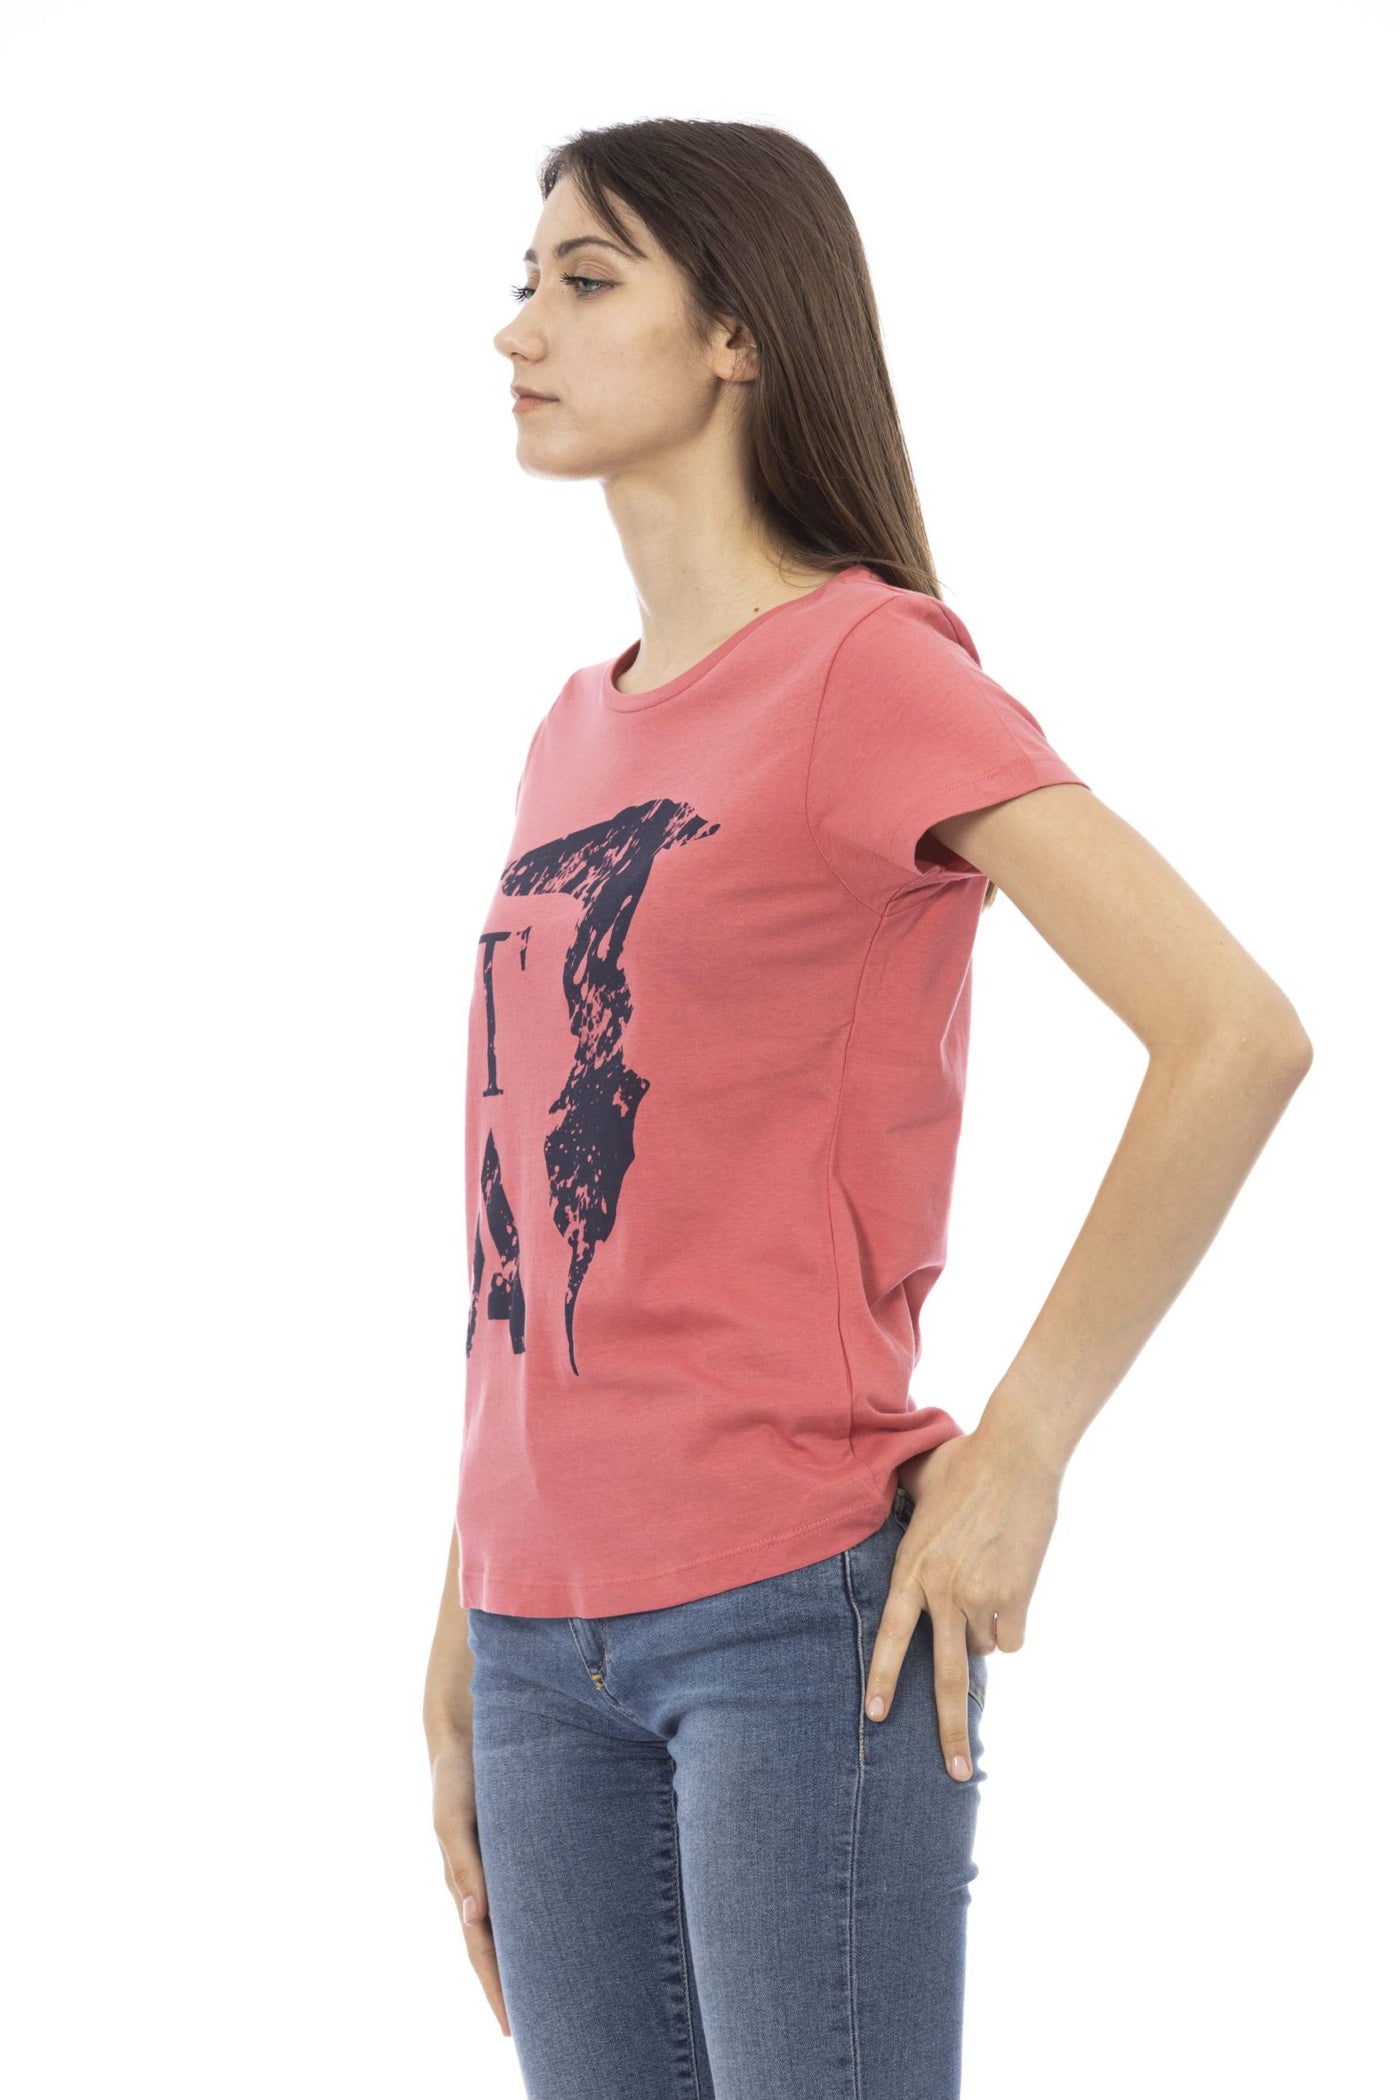 Trussardi Action Pink Cotton Tops & T-Shirt